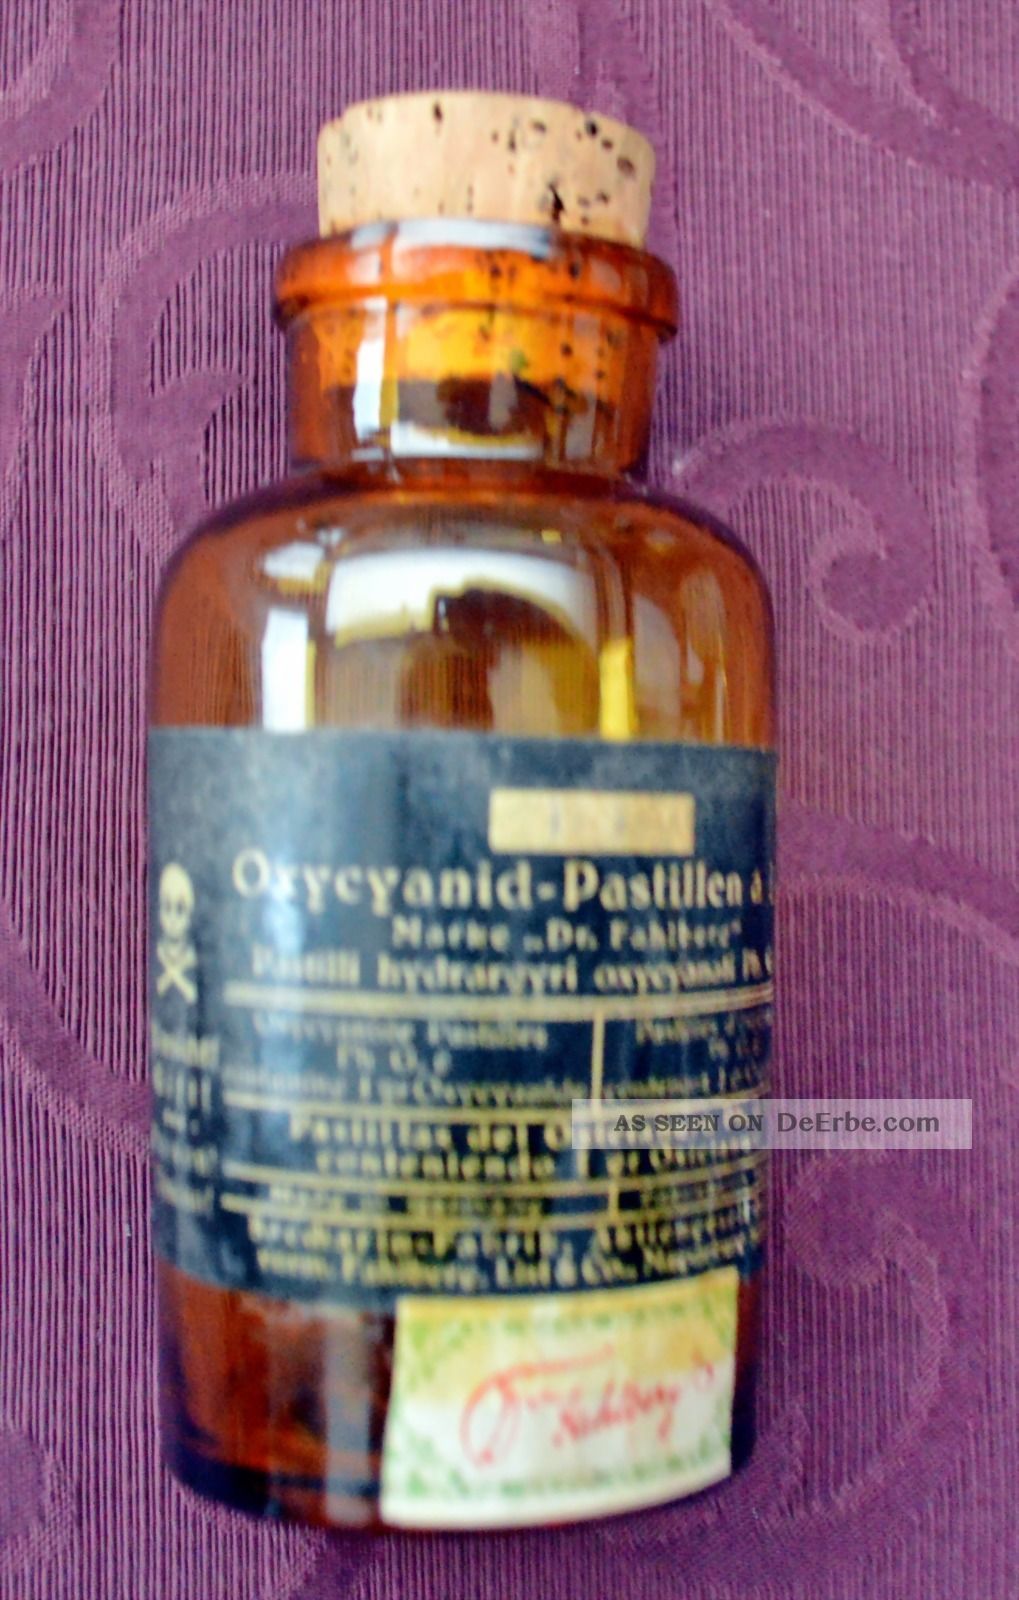 Antike Giftflasche,  Oxycyanid - Pastillen Marke 